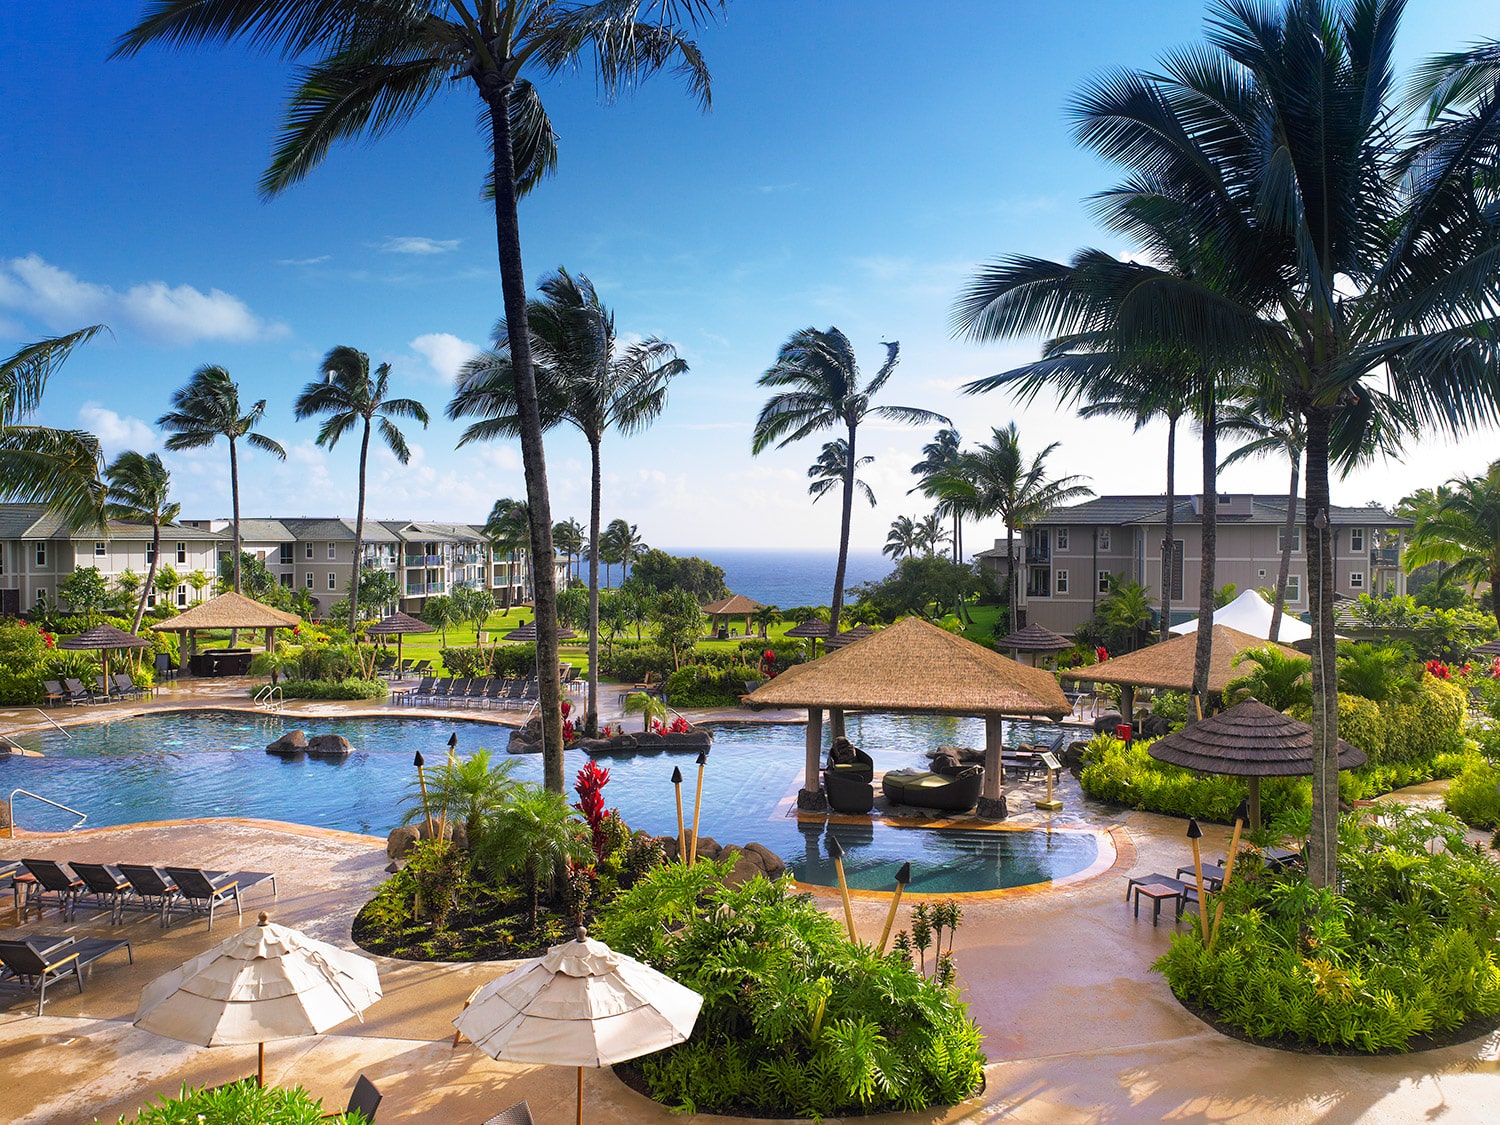 Cheap Hawaii Hotels and Resort - The Westin Princeville Ocean Resort Villas on Kauai